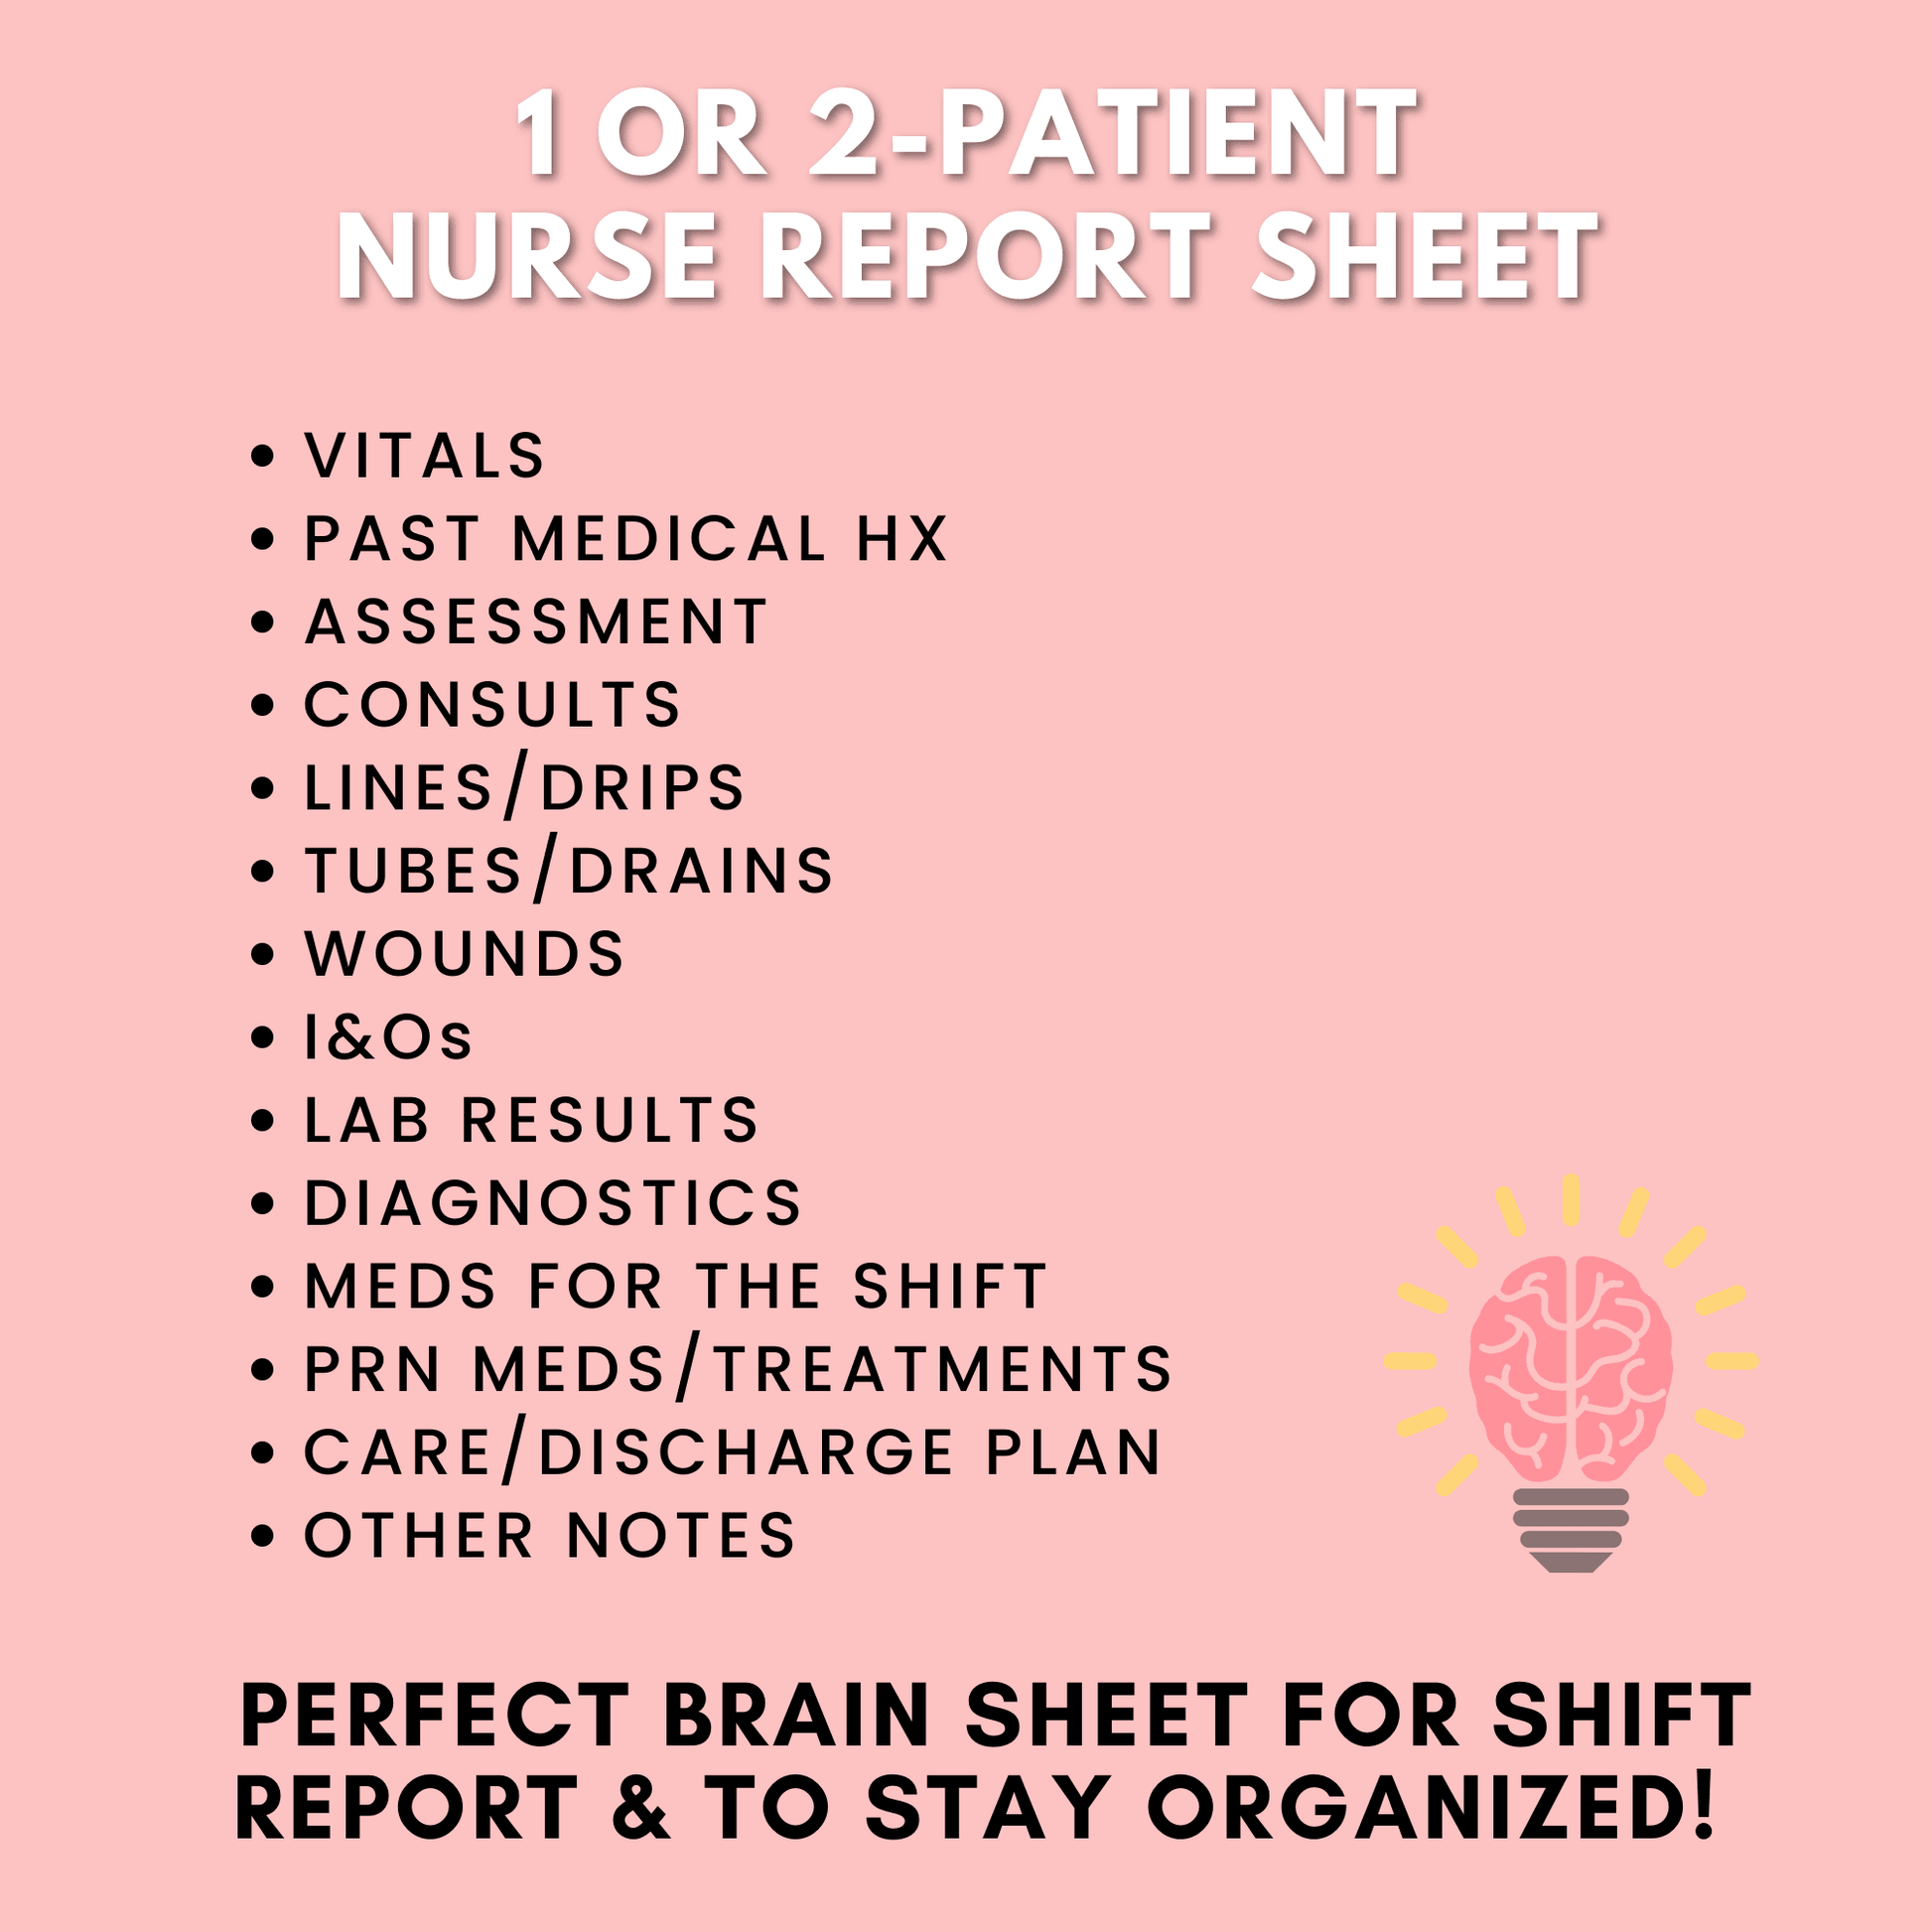 1 or 2-Patient Nurse Report Sheet for Nursing Students by OrganizedNurseDesigns